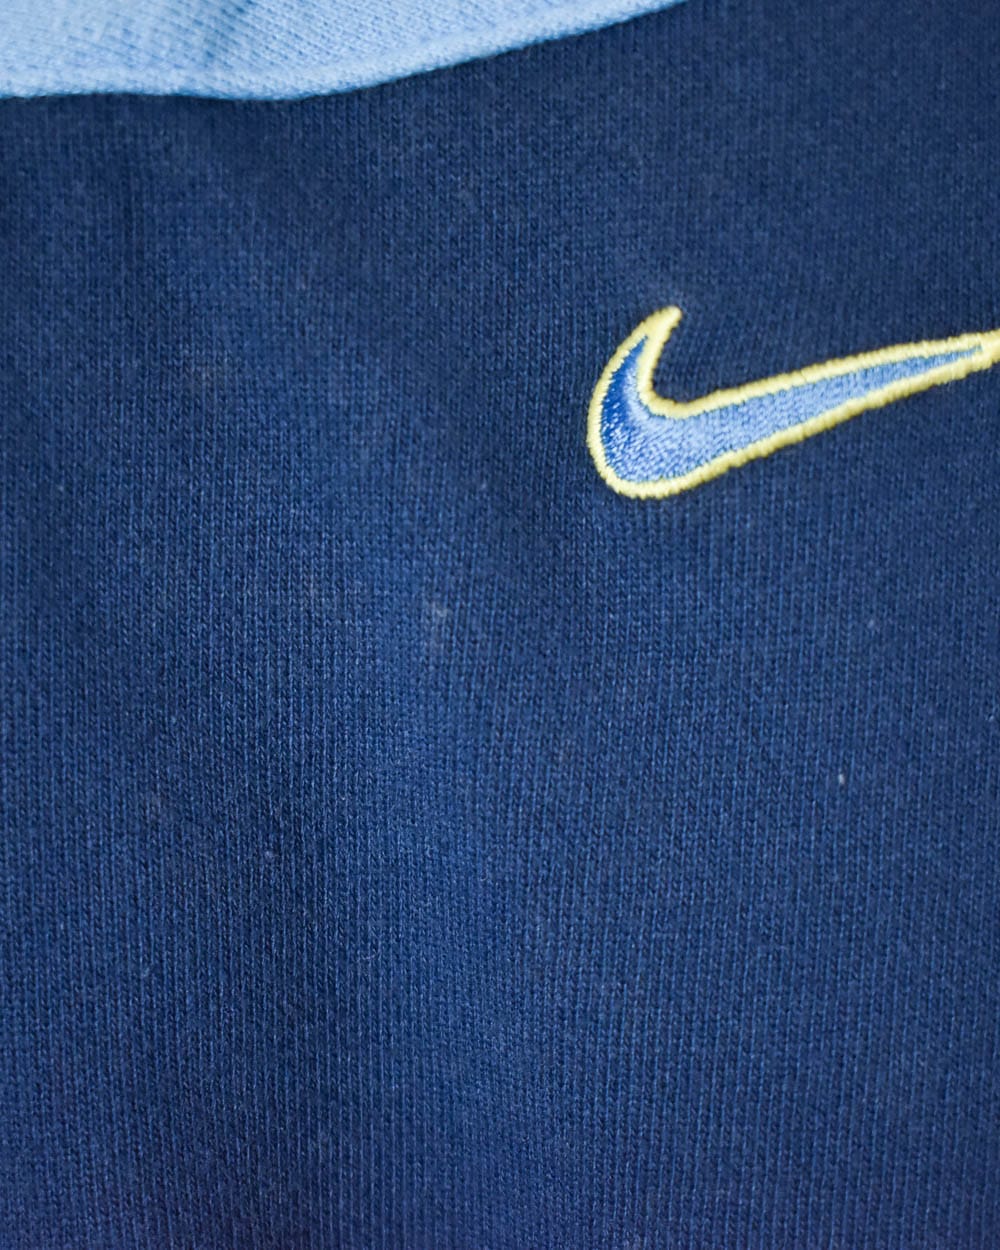 Navy Nike Flight 1/4 Zip Sweatshirt - Medium